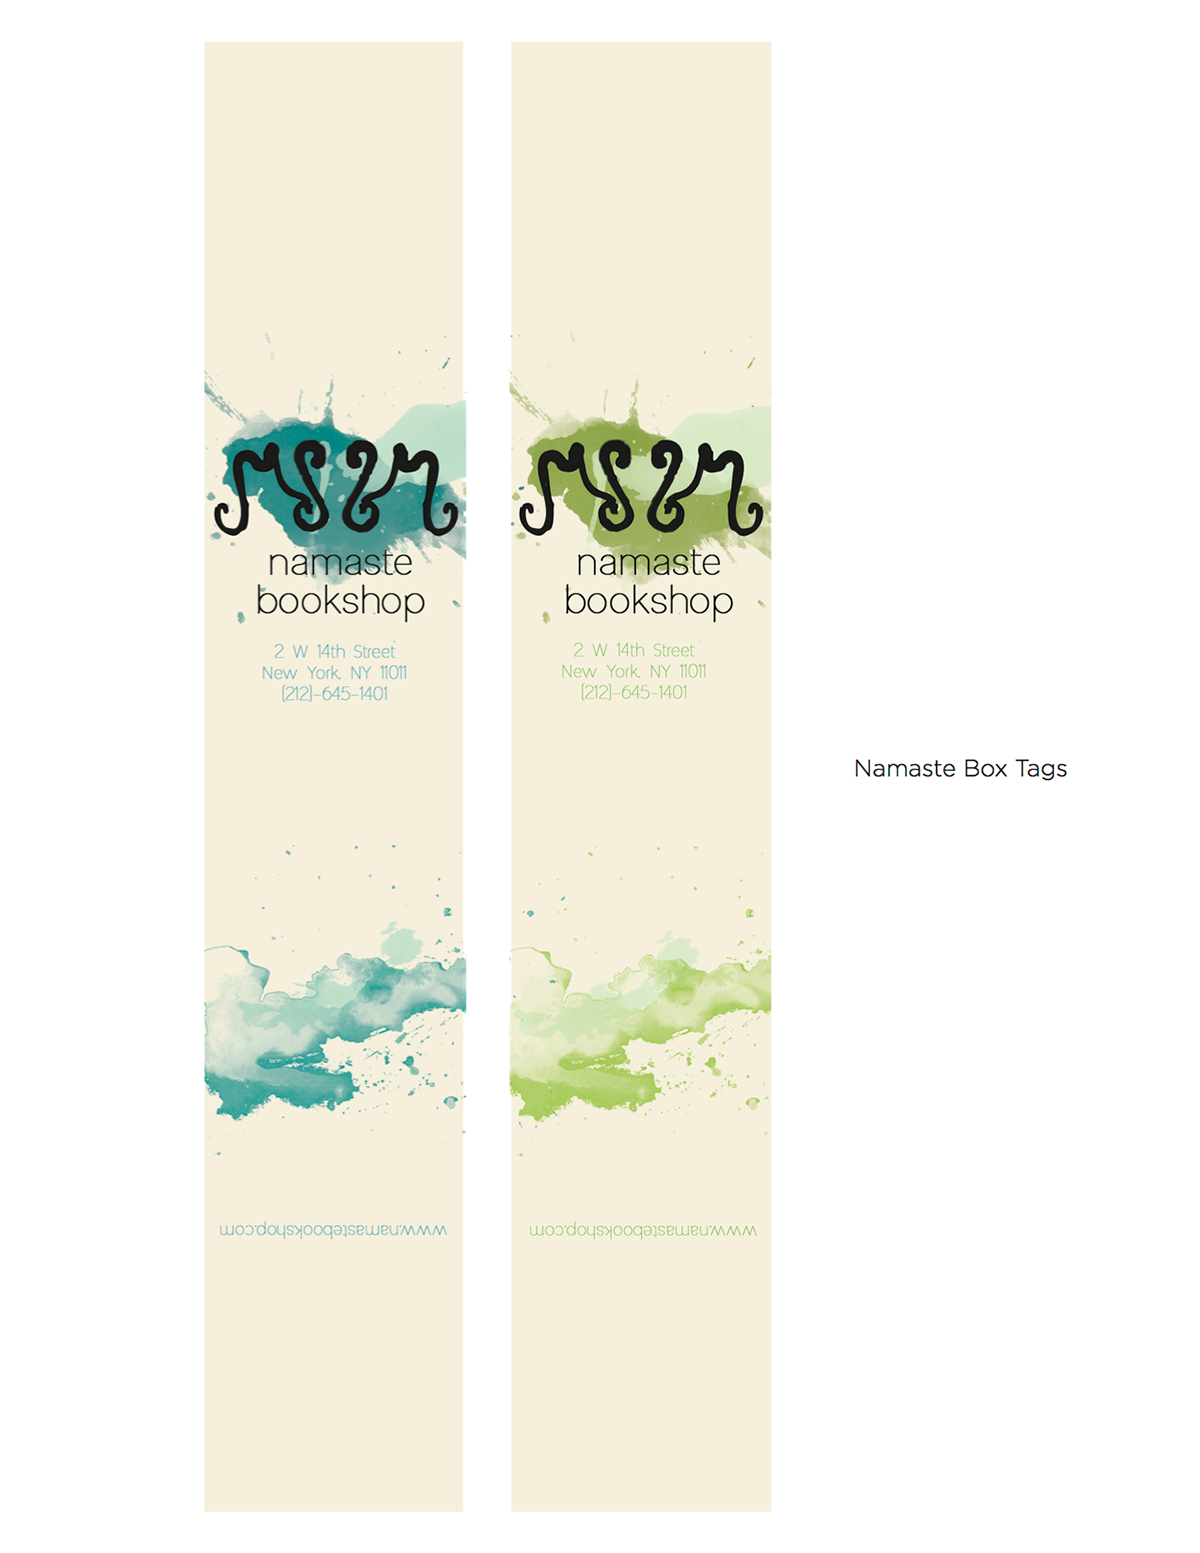 namaste book rebranding bookshop peace watercolor ink colorful Bookstore